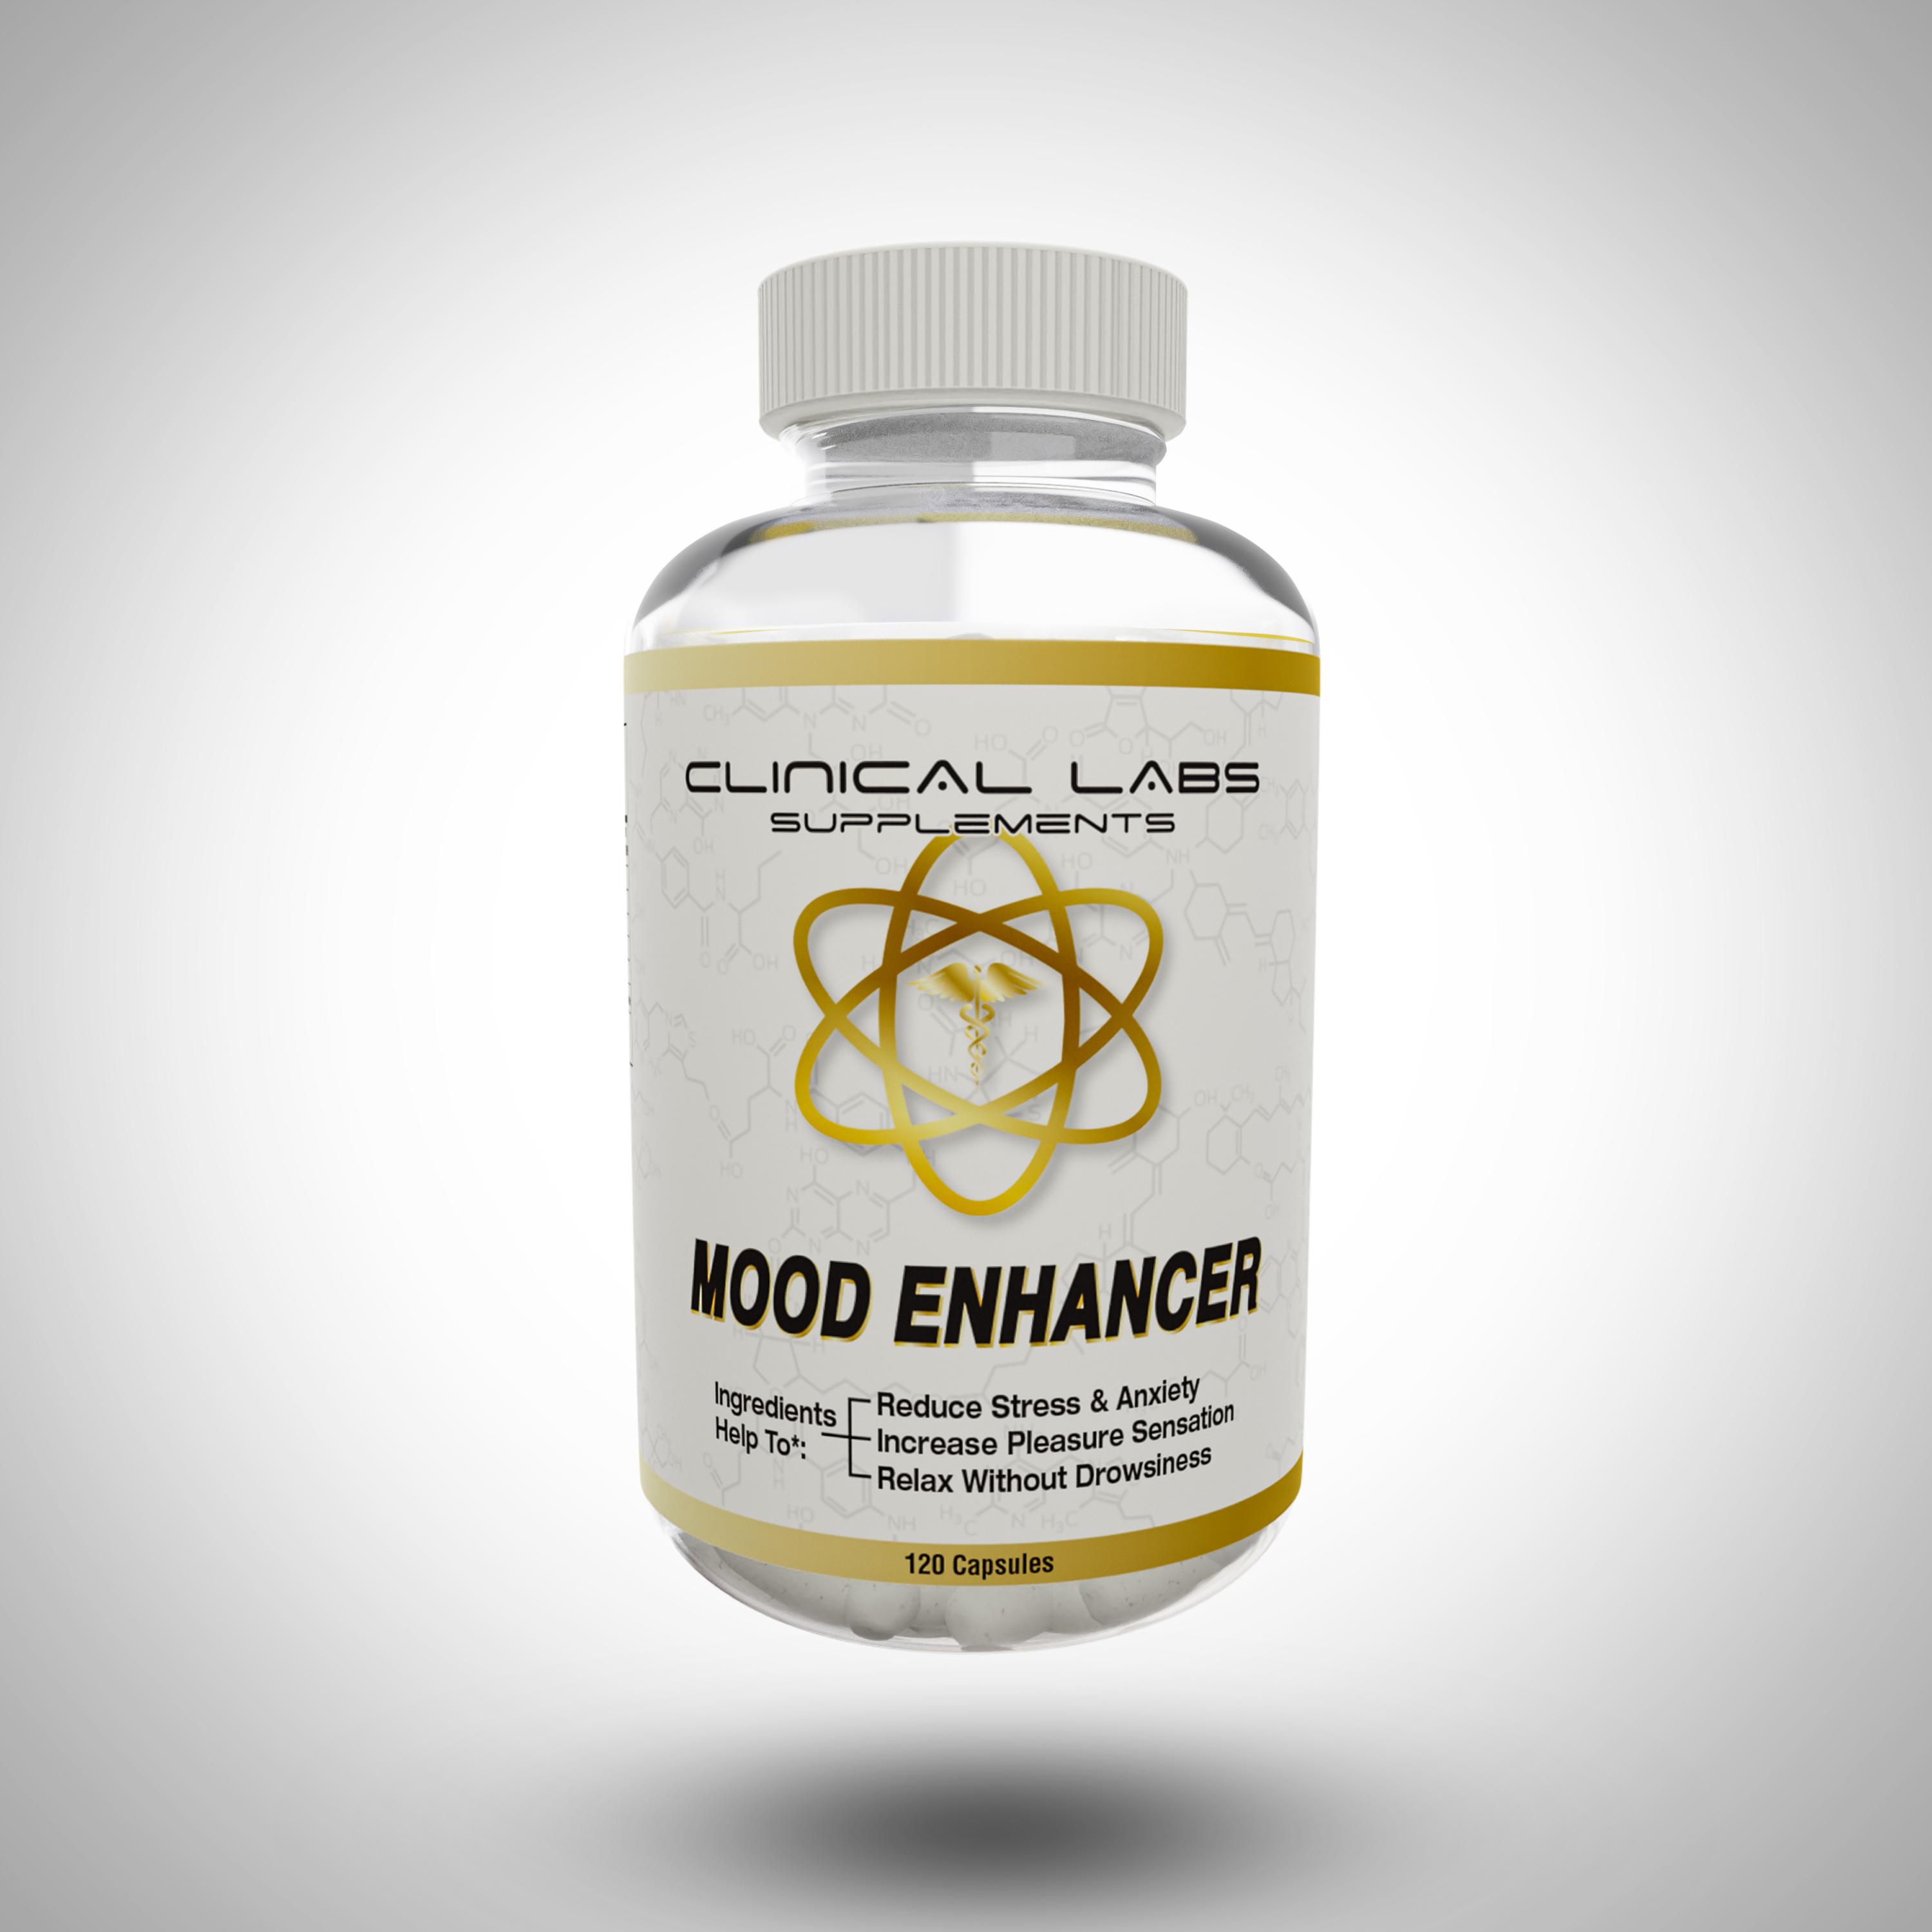 Mood enhancer supplement